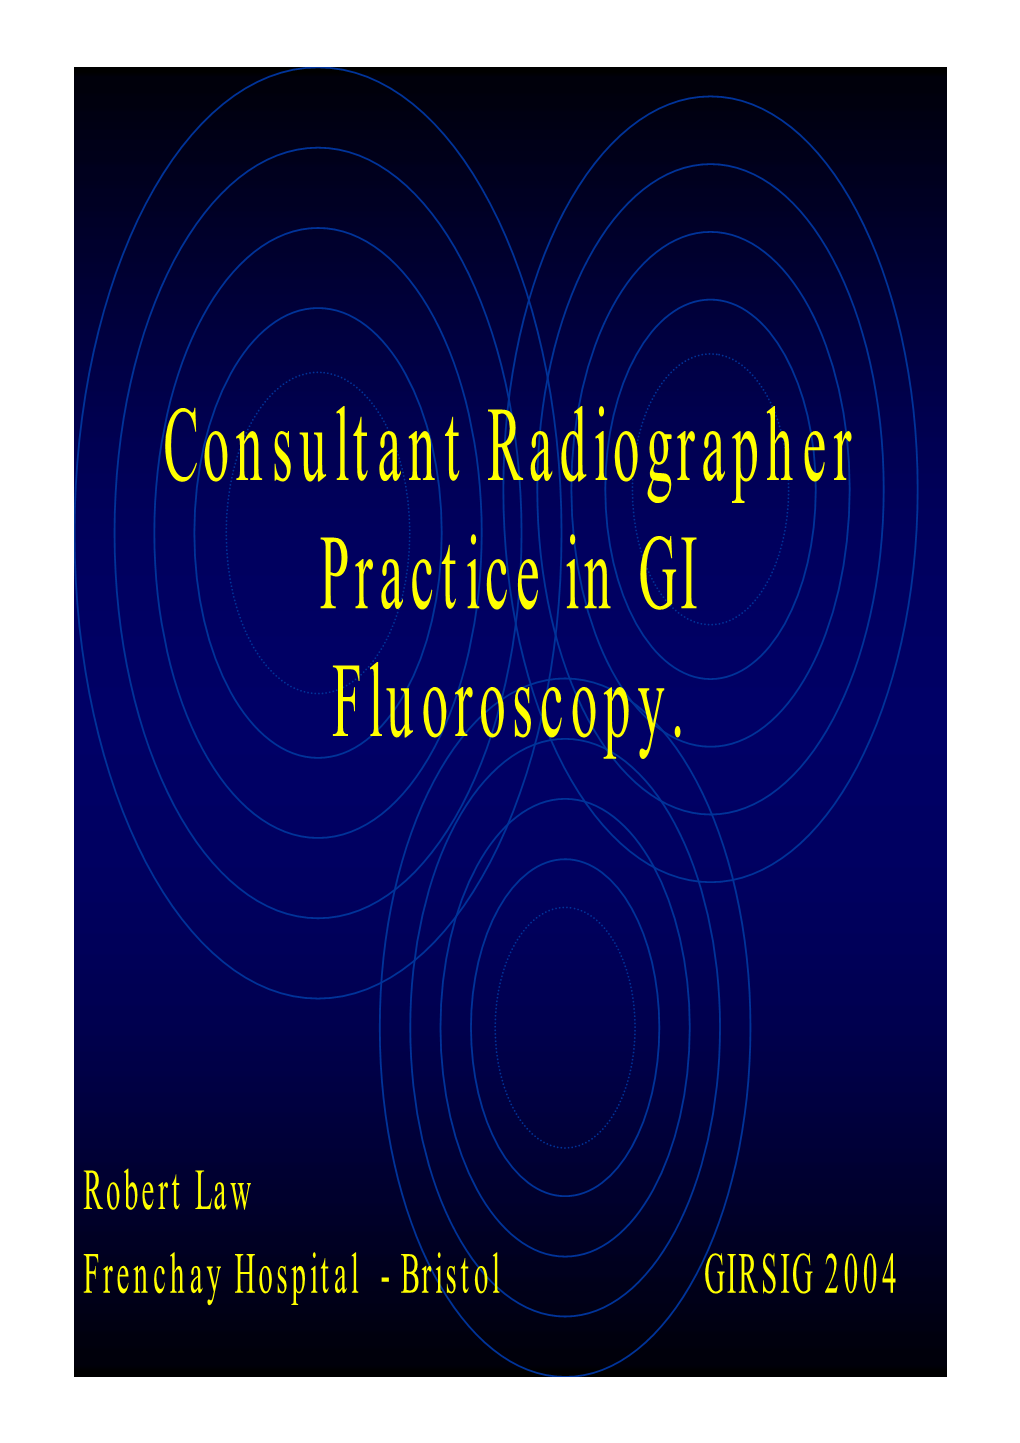 Consultant Radiographer Practice in GI Fluoroscopy